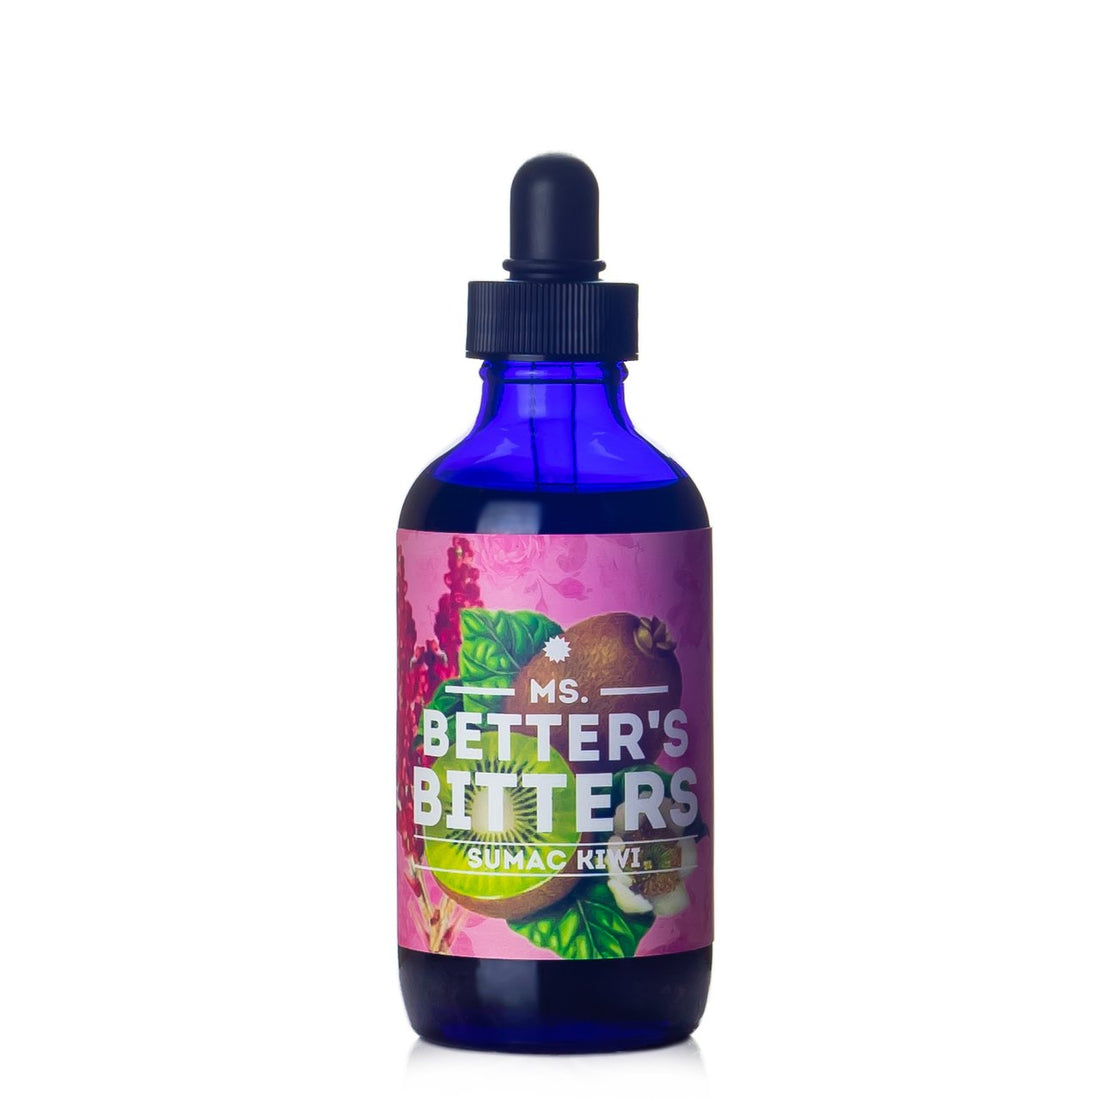 Ms. Better's | Sumac Kiwi Bitters